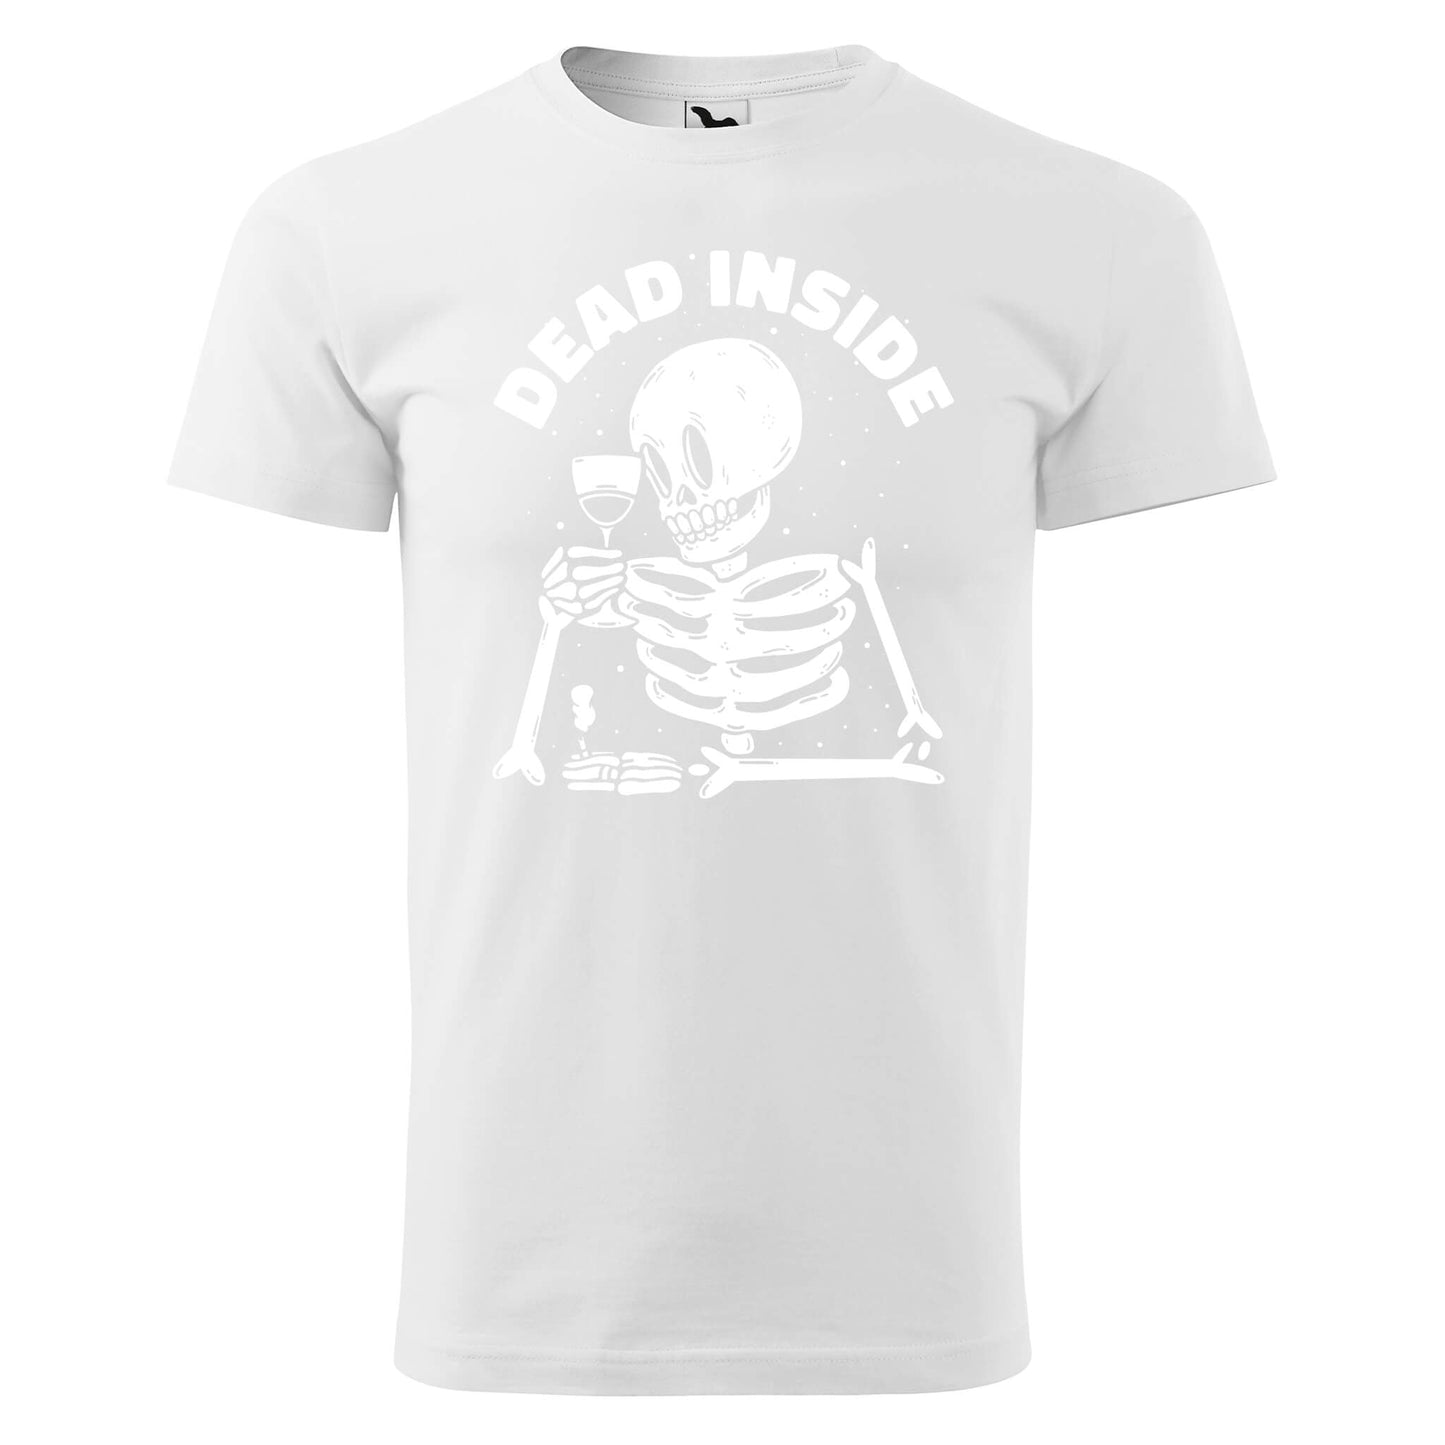 Dead inside t-shirt - rvdesignprint